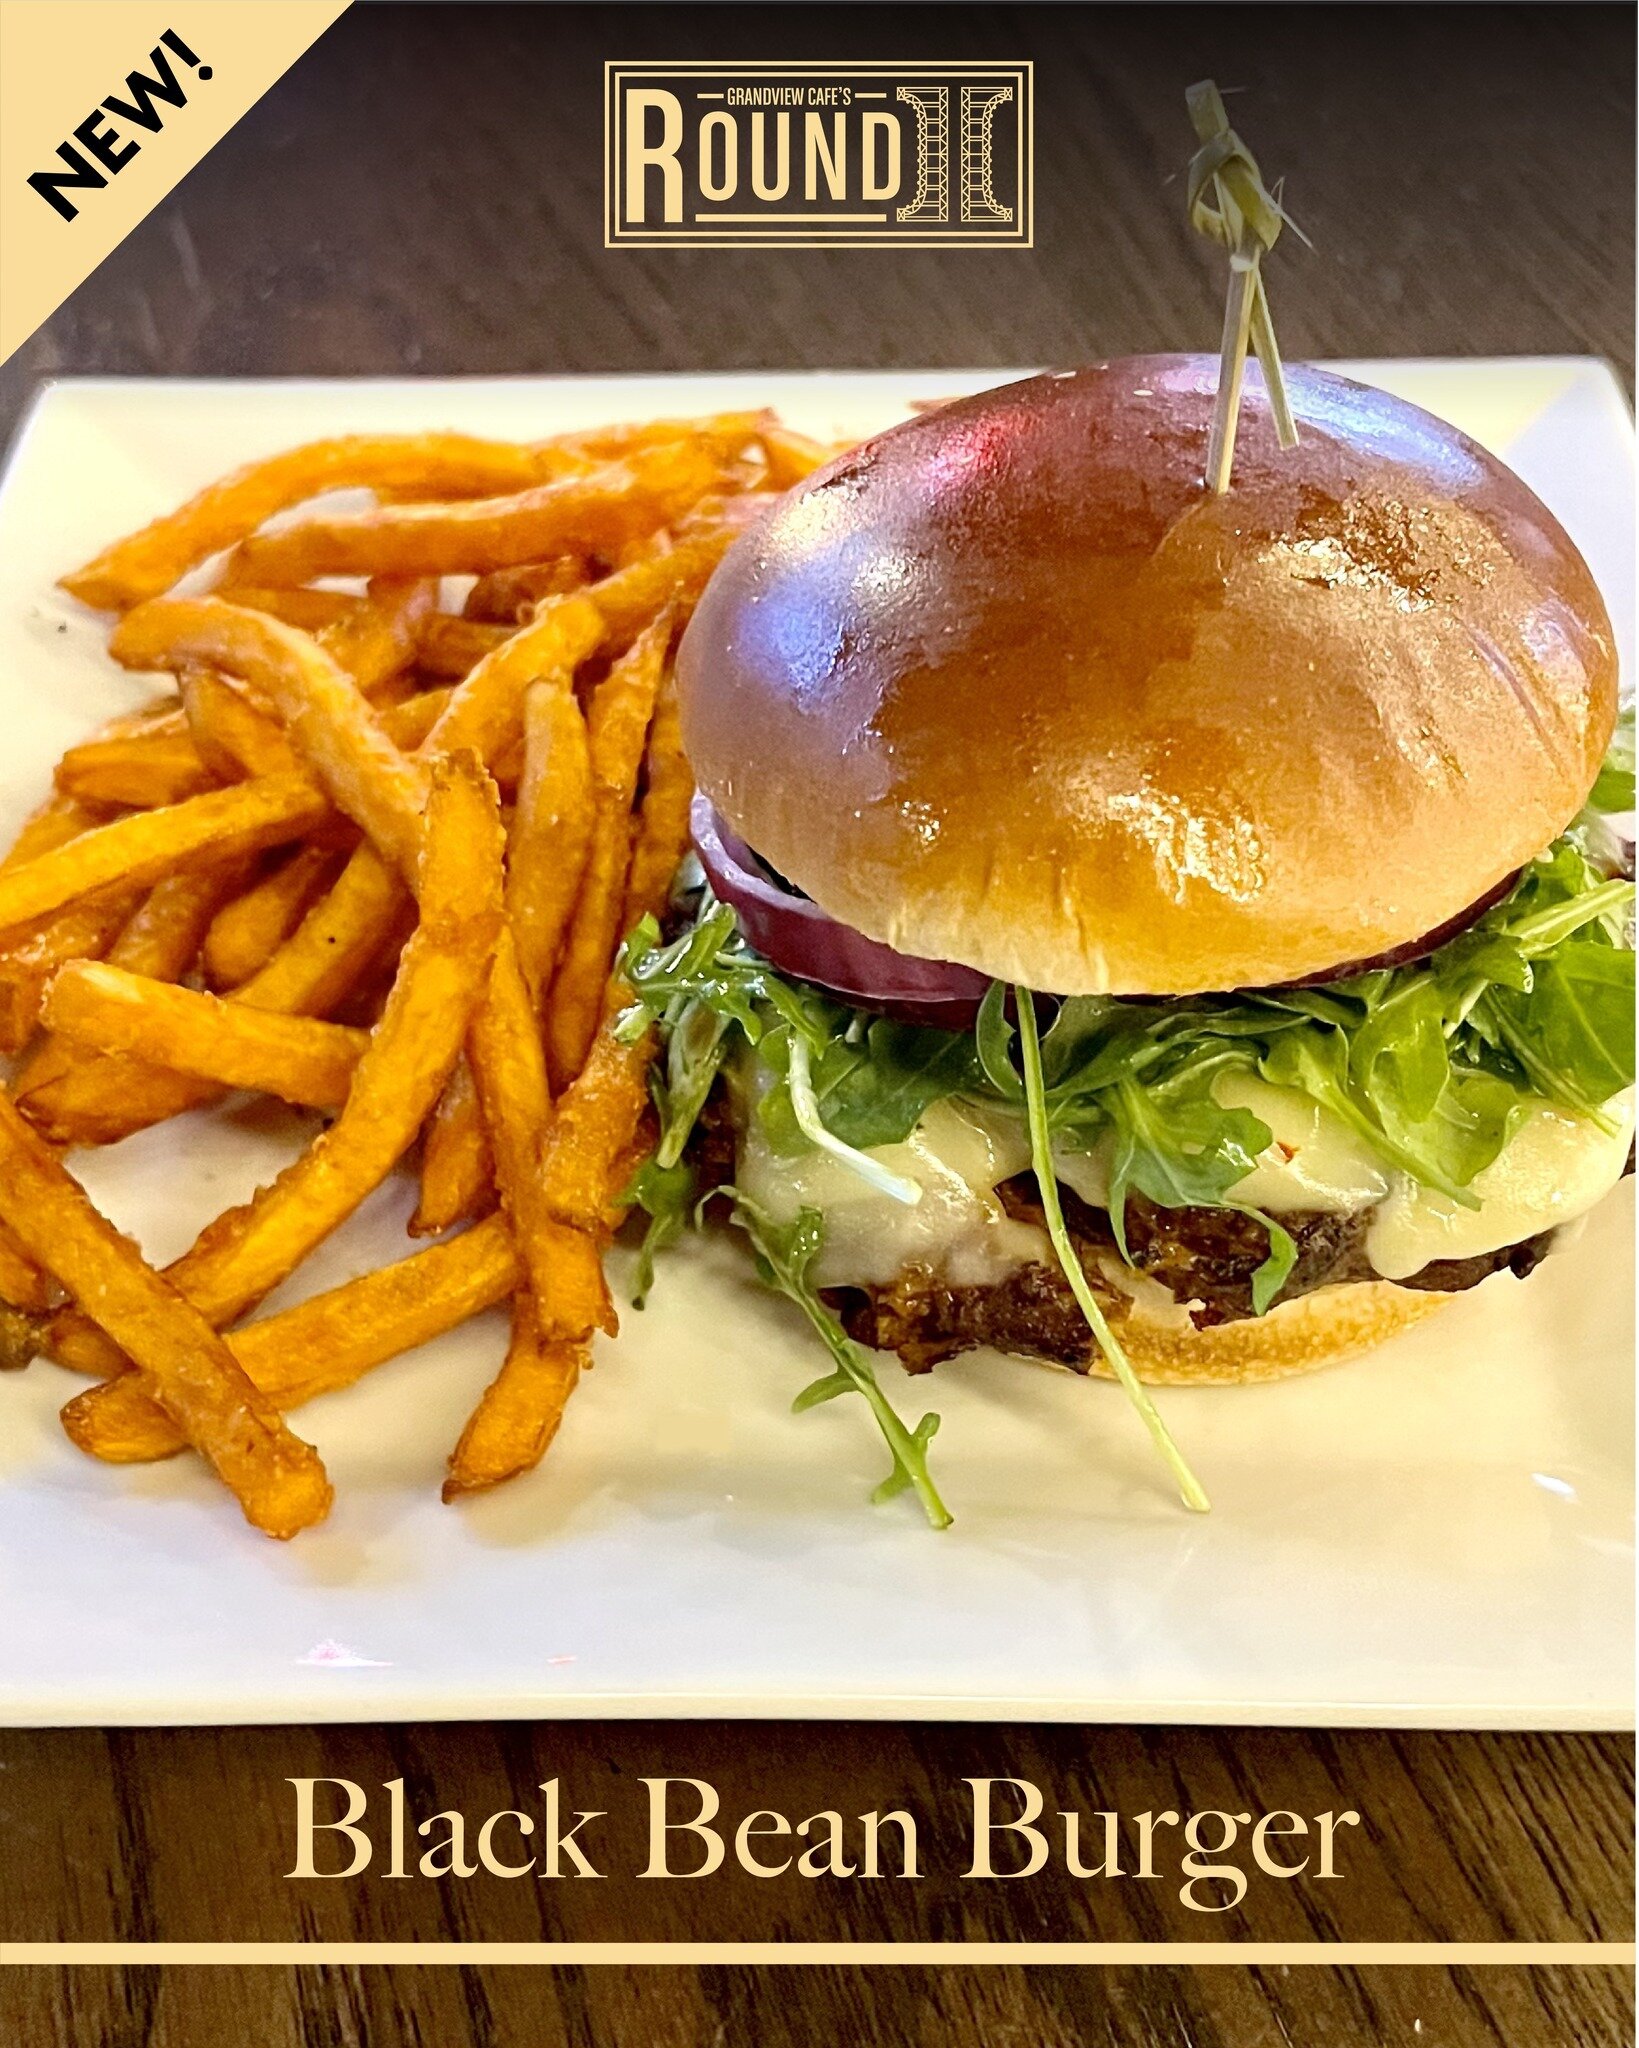 NEW: BLACK BEAN BURGER | Our hearty black bean burger features Pepper Jack cheese, chipotle mayo, romaine lettuce, mashed avocado, red onion &amp; garlic pickles on a brioche bun.

#newmenu #freshtake #comingsoon #cafesround2 #grandviewcafe #grandvie